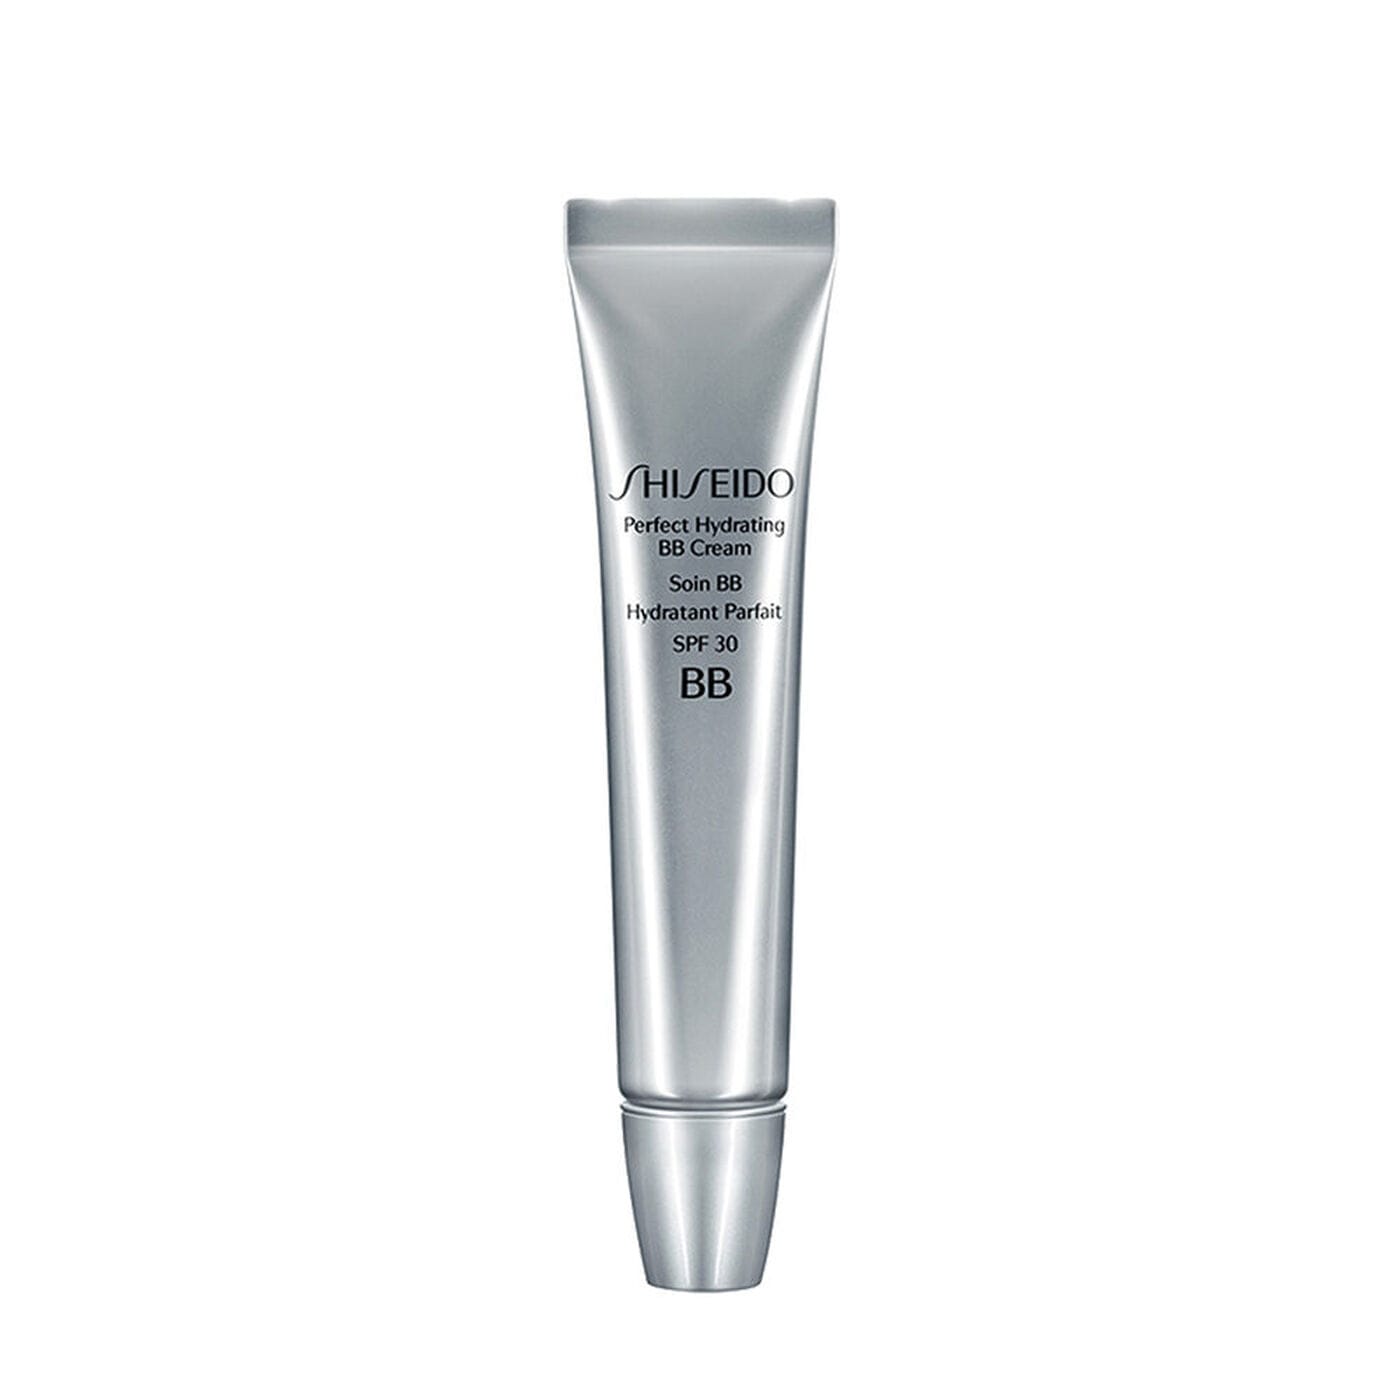 Shiseido | SHISEIDO - Perfect Hydrating BB Cream SPF 30 - 30mL